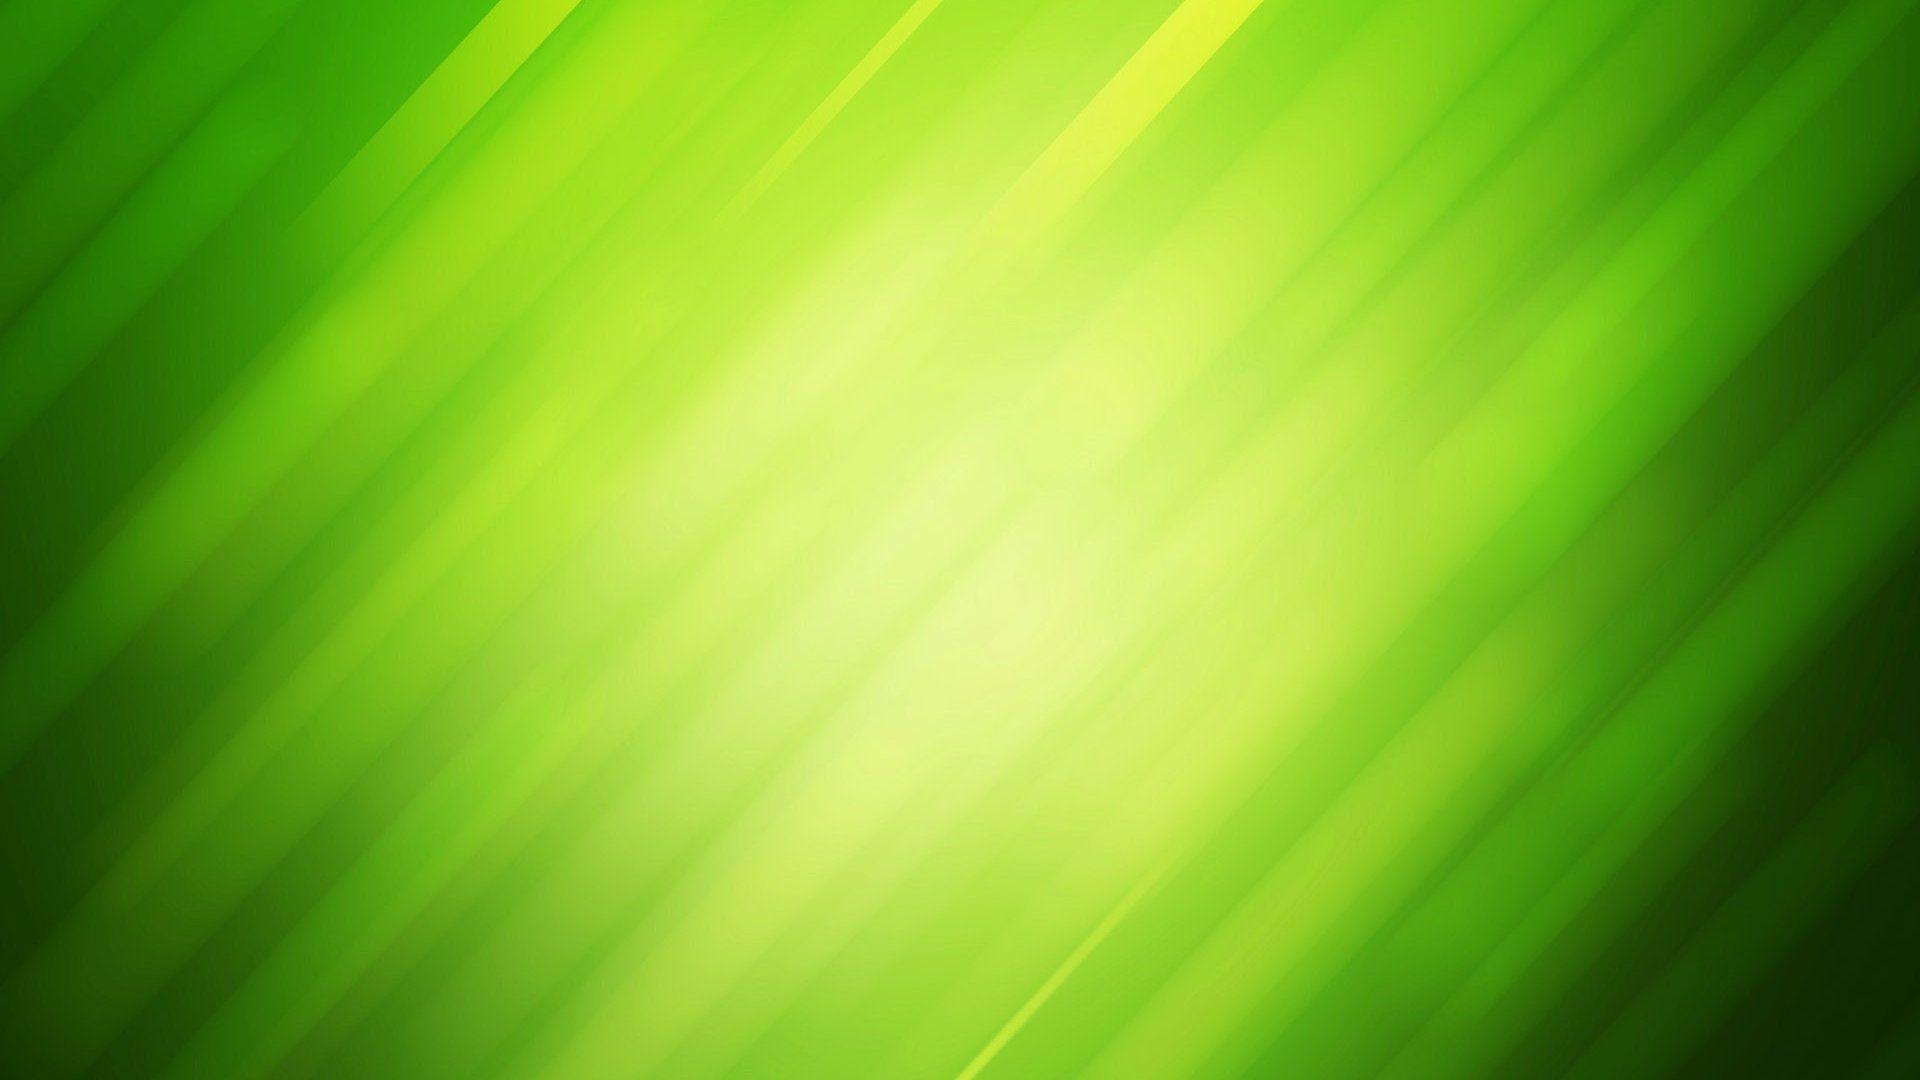 Green Wallpaper Design (Picture)